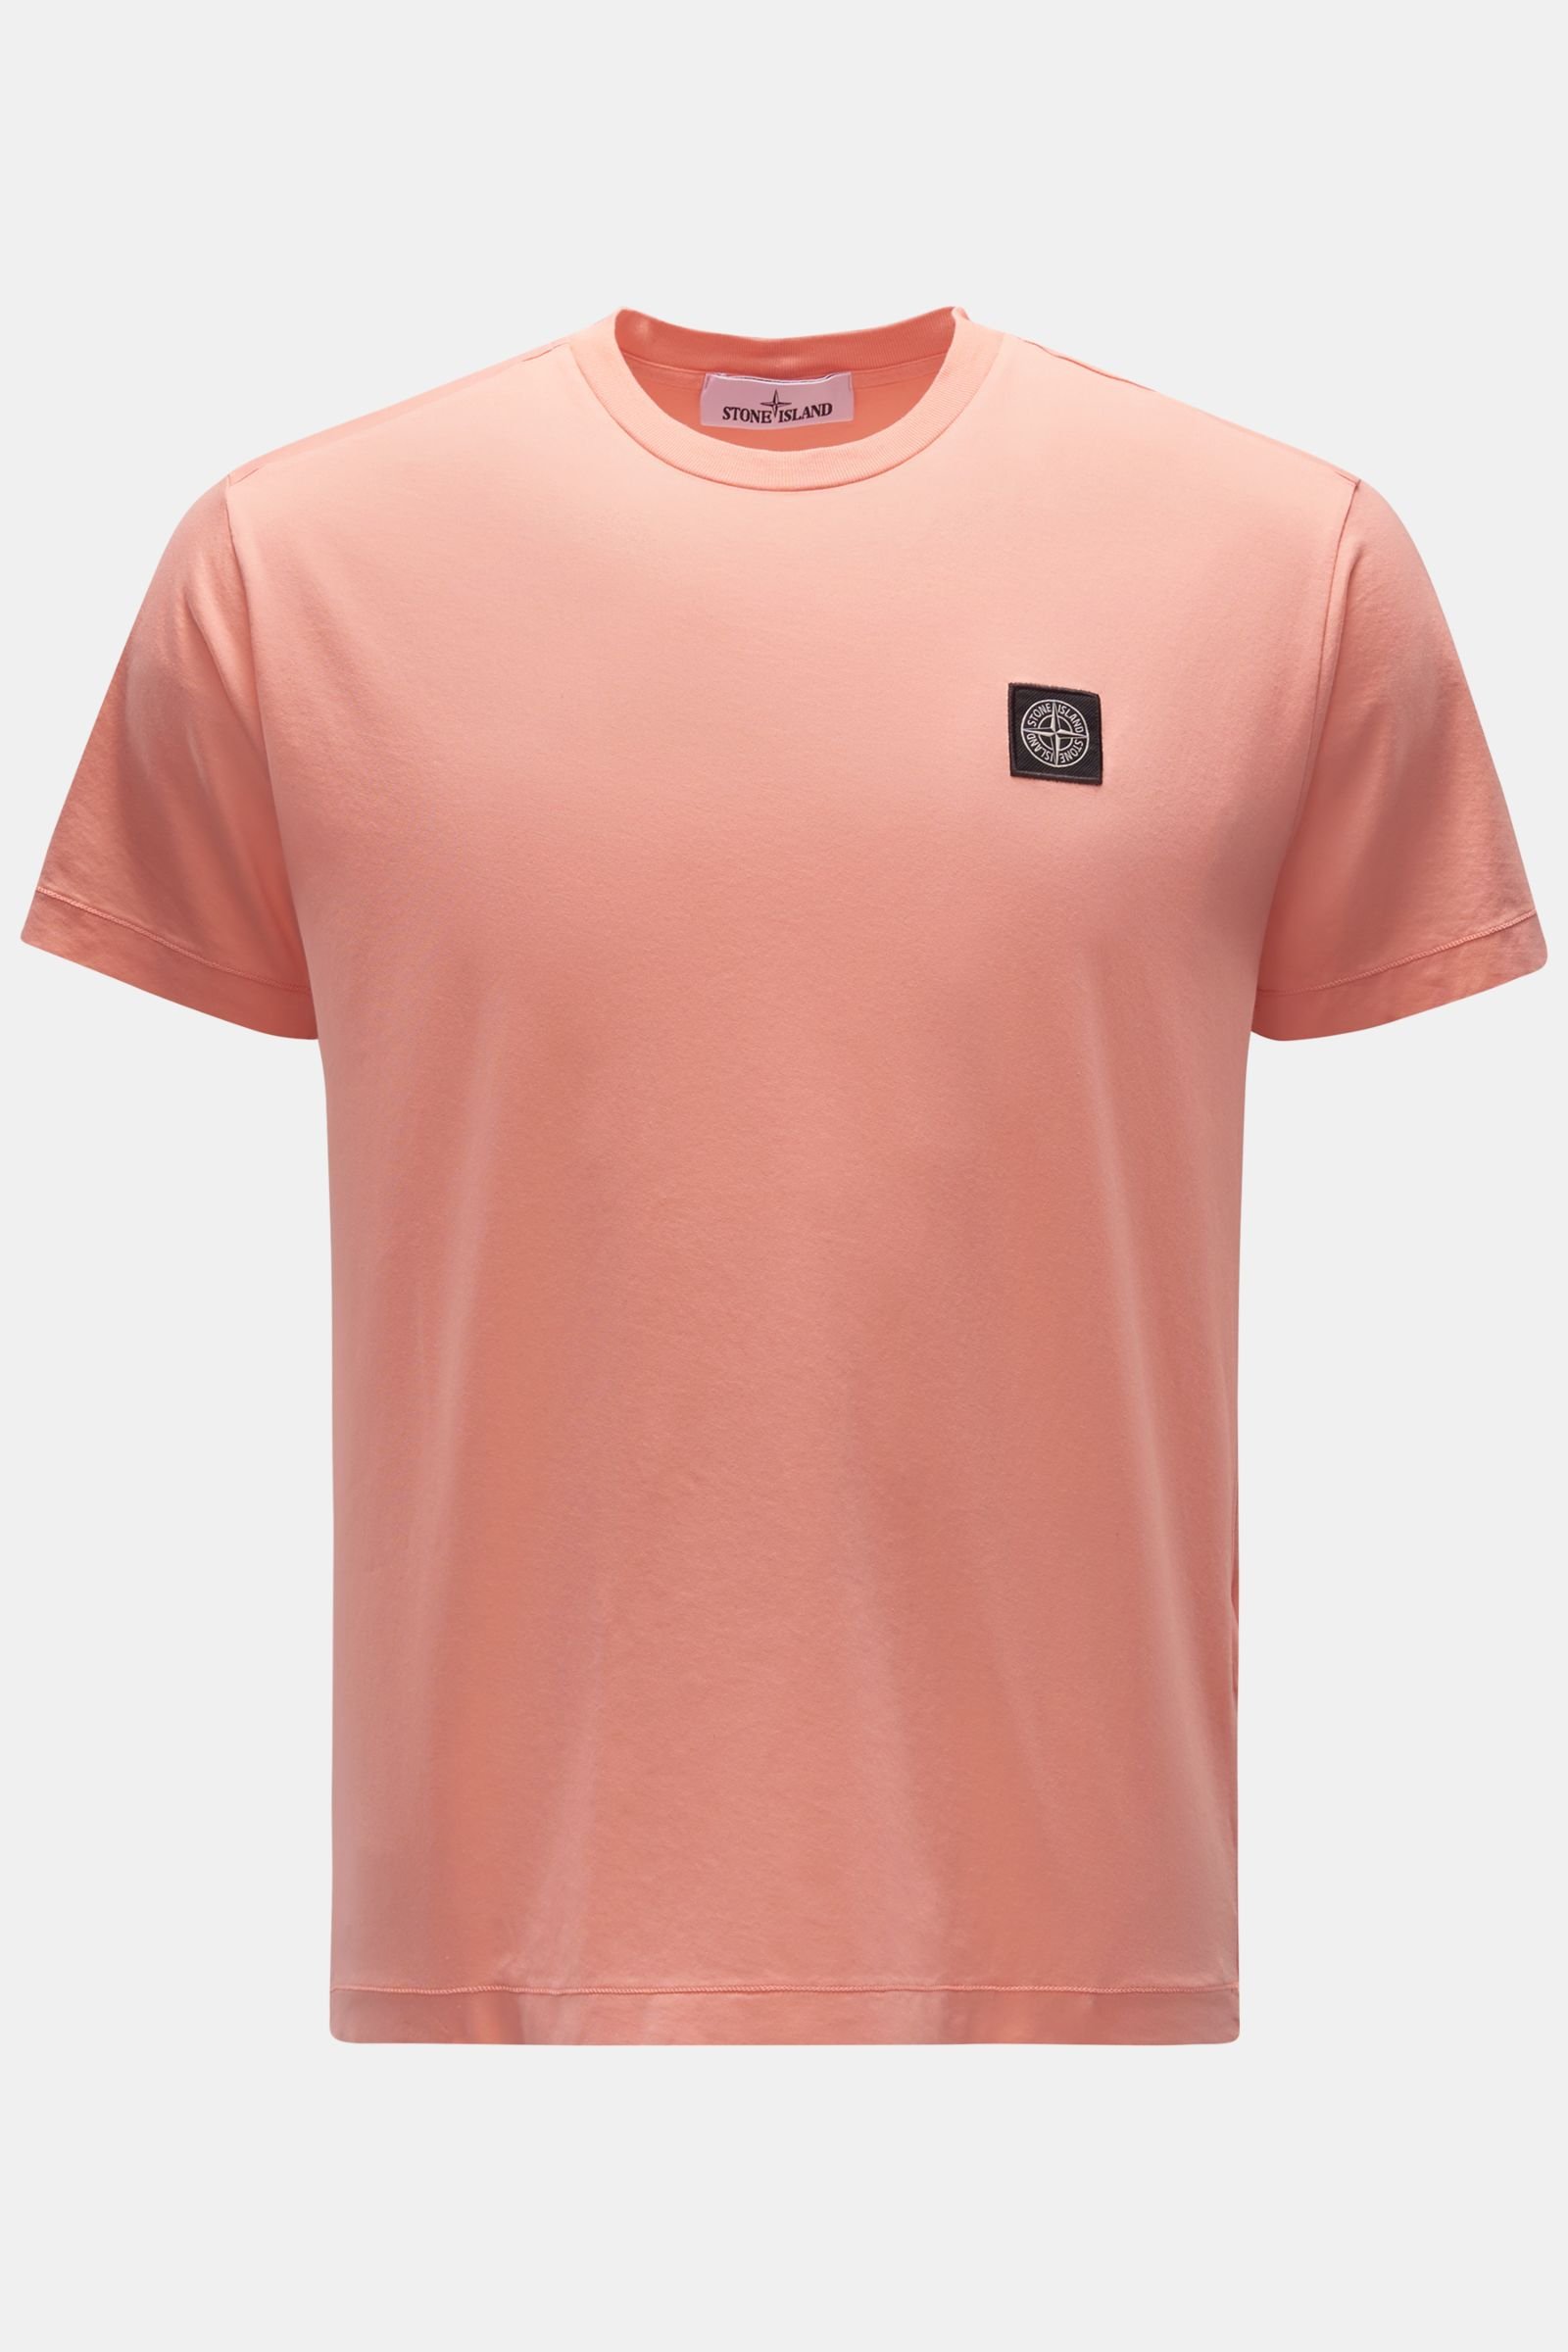 Crew neck T-shirt coral